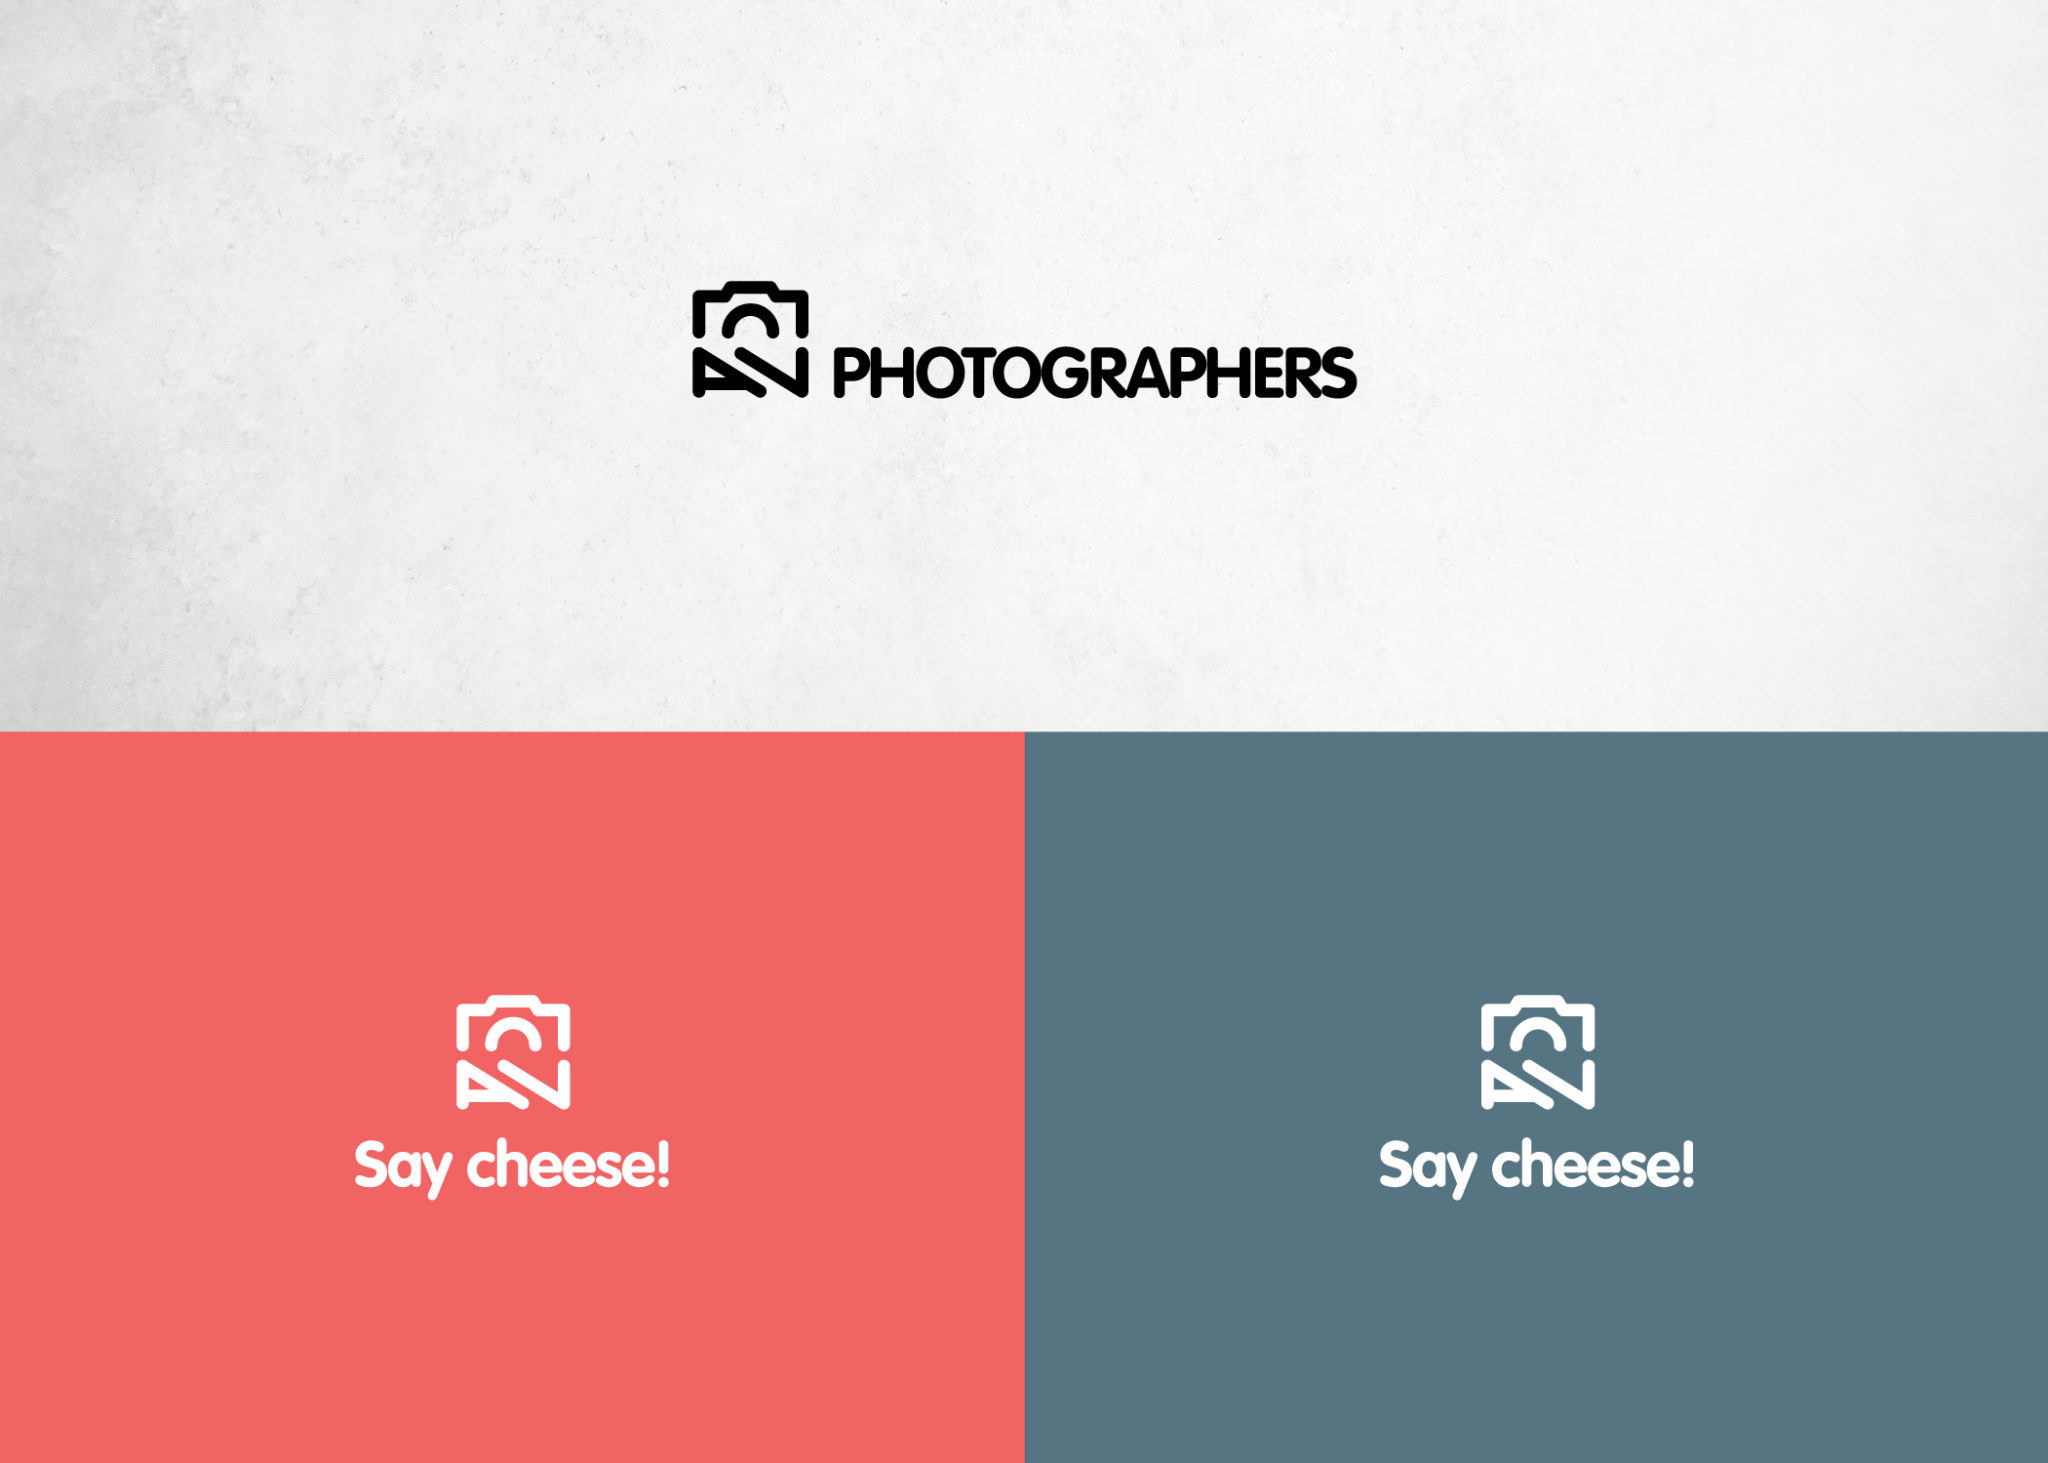 AV Photographers Logo and Tag Lines